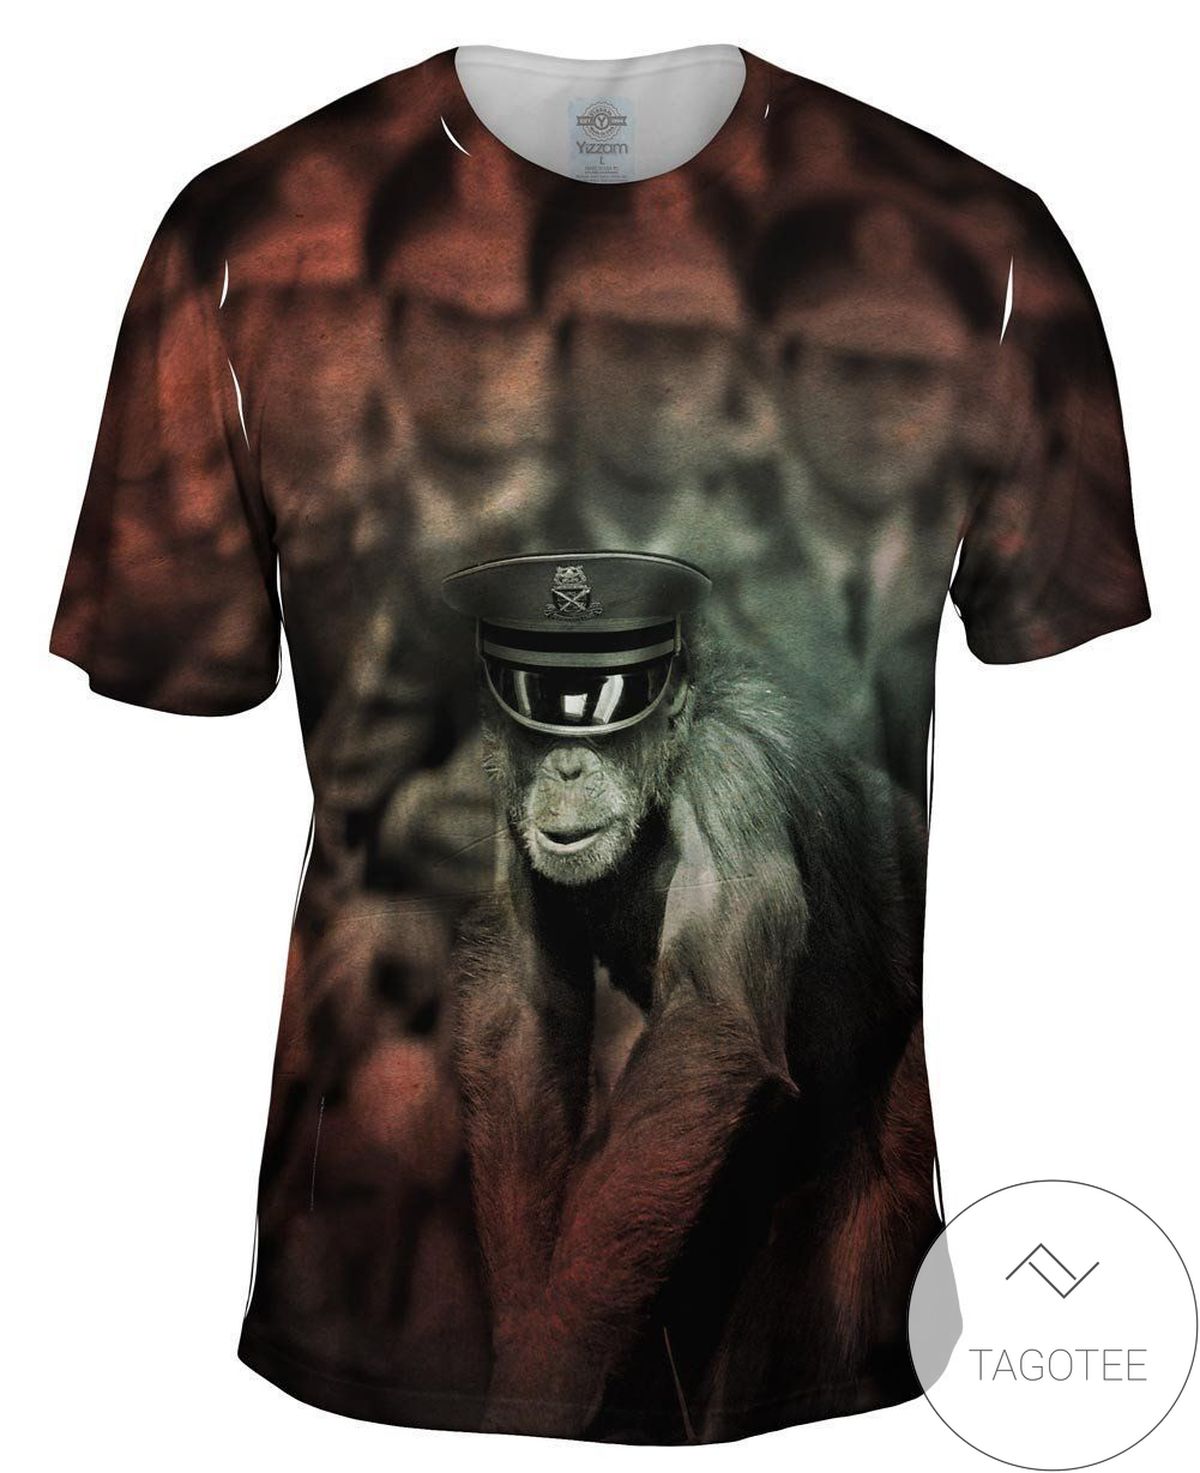 Army Chimp Mens All Over Print T-shirt